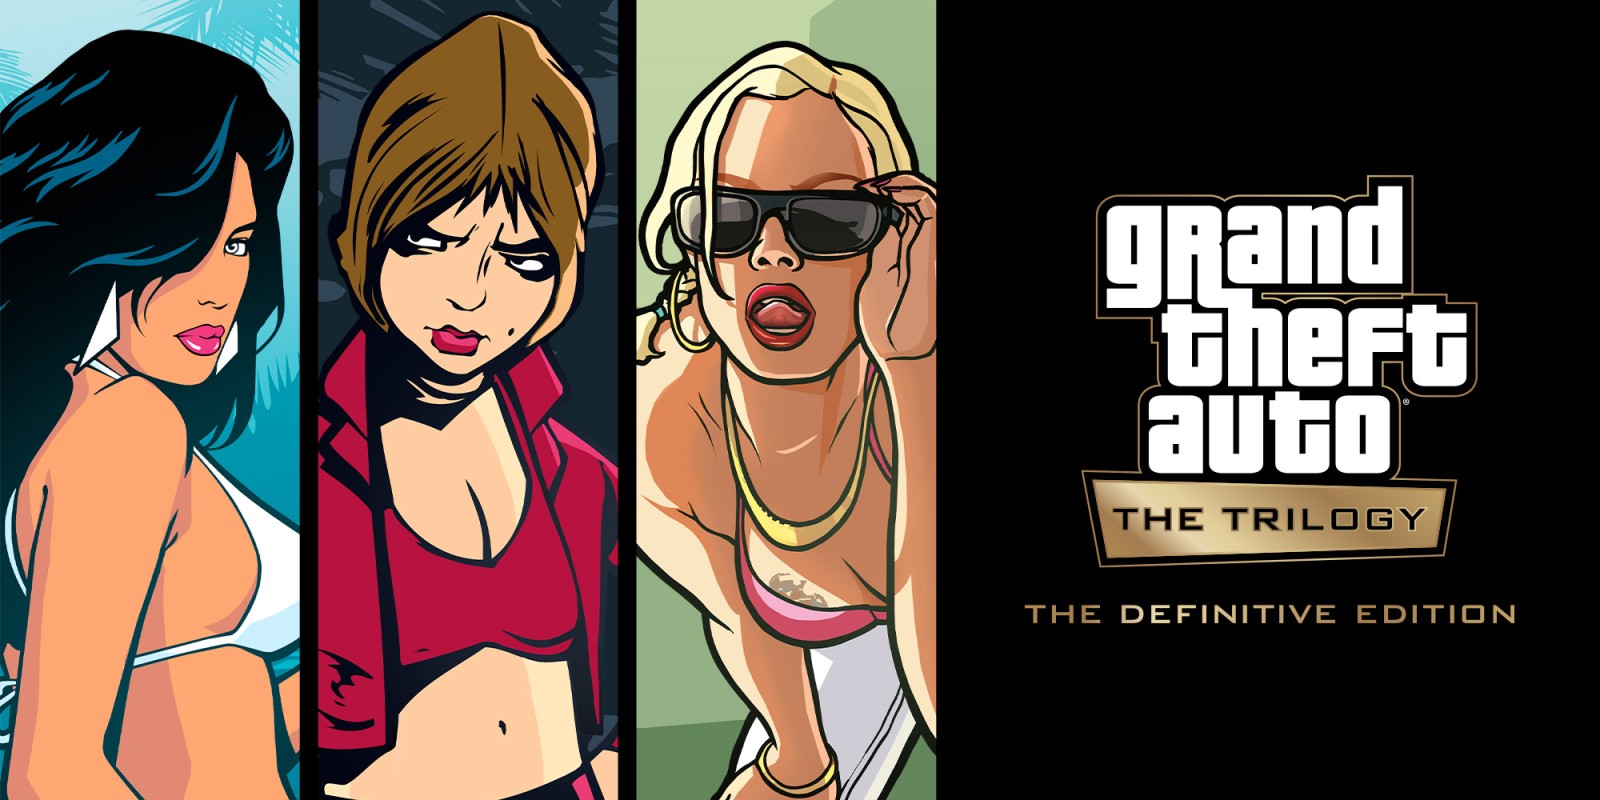 Grand Theft Auto: Vice City Stories Paradise FM (2021, Clear